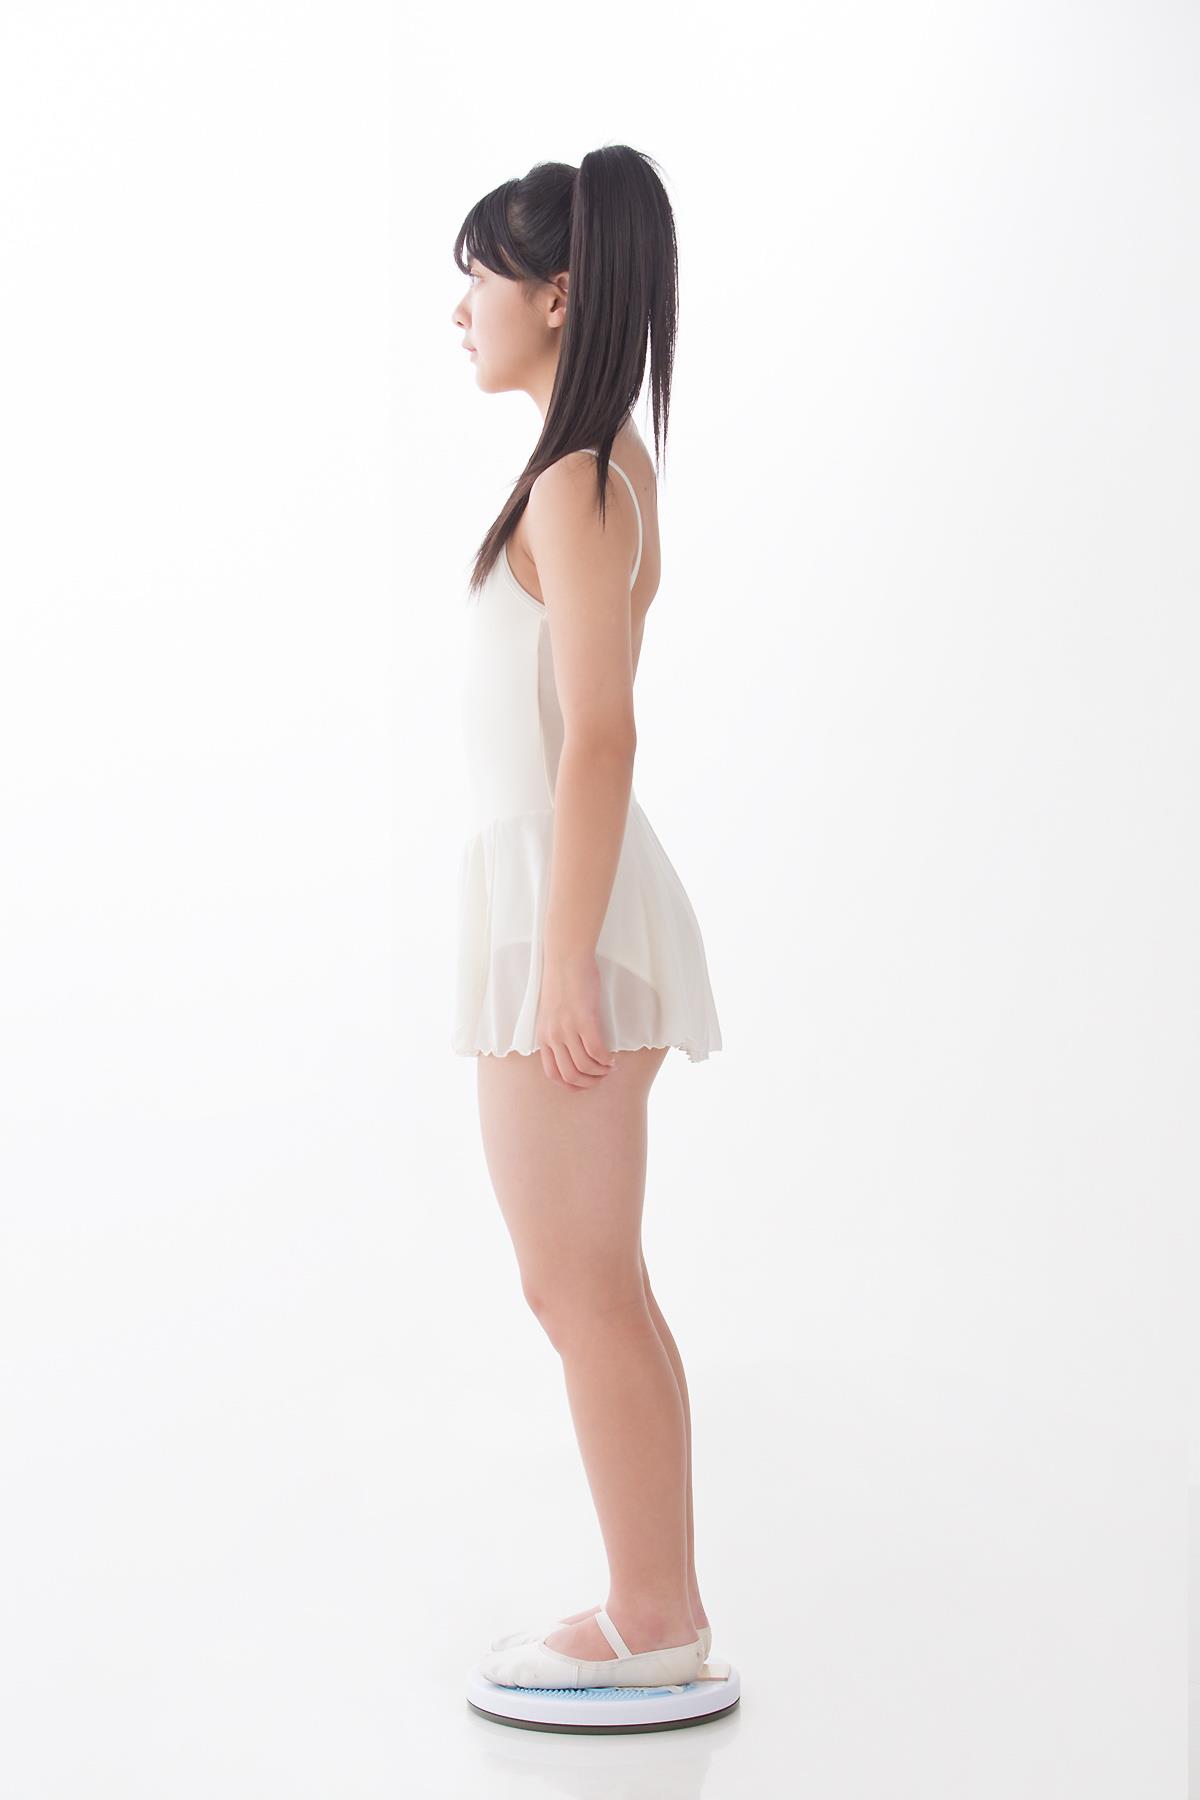 Minisuka.tv Saria Natsume 夏目咲莉愛 - Premium Gallery 2.2 - 3.jpg